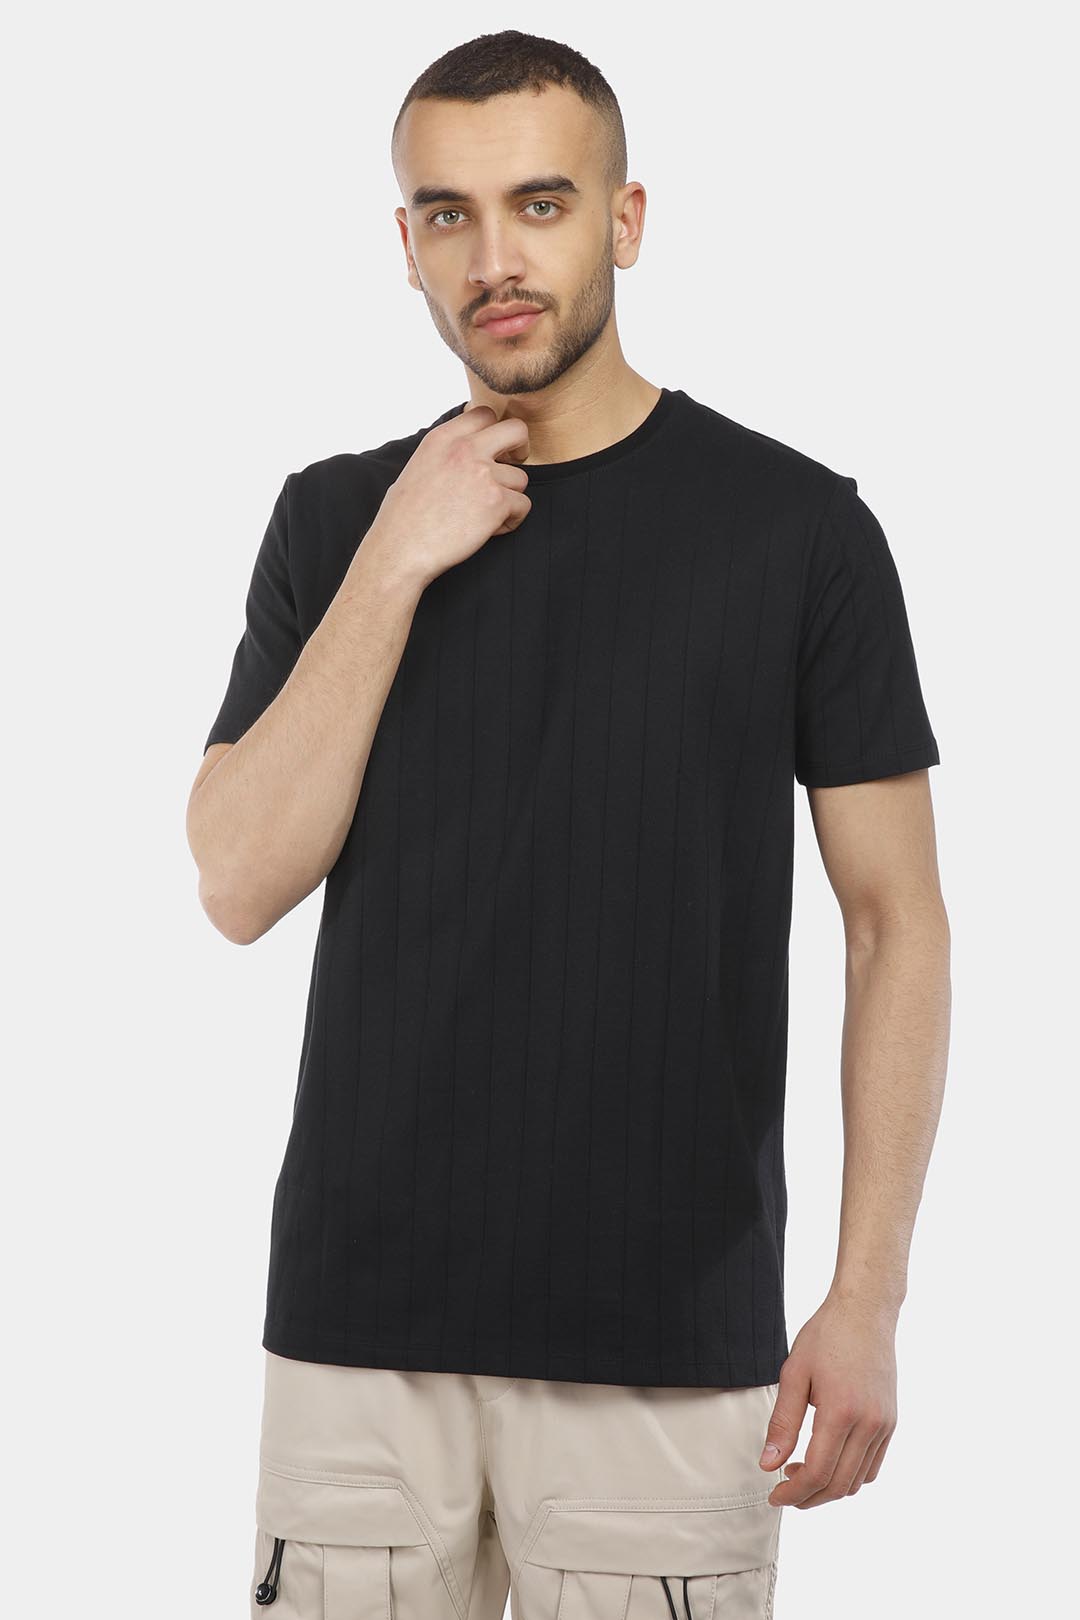 t-shirt black 002/S24/M202220